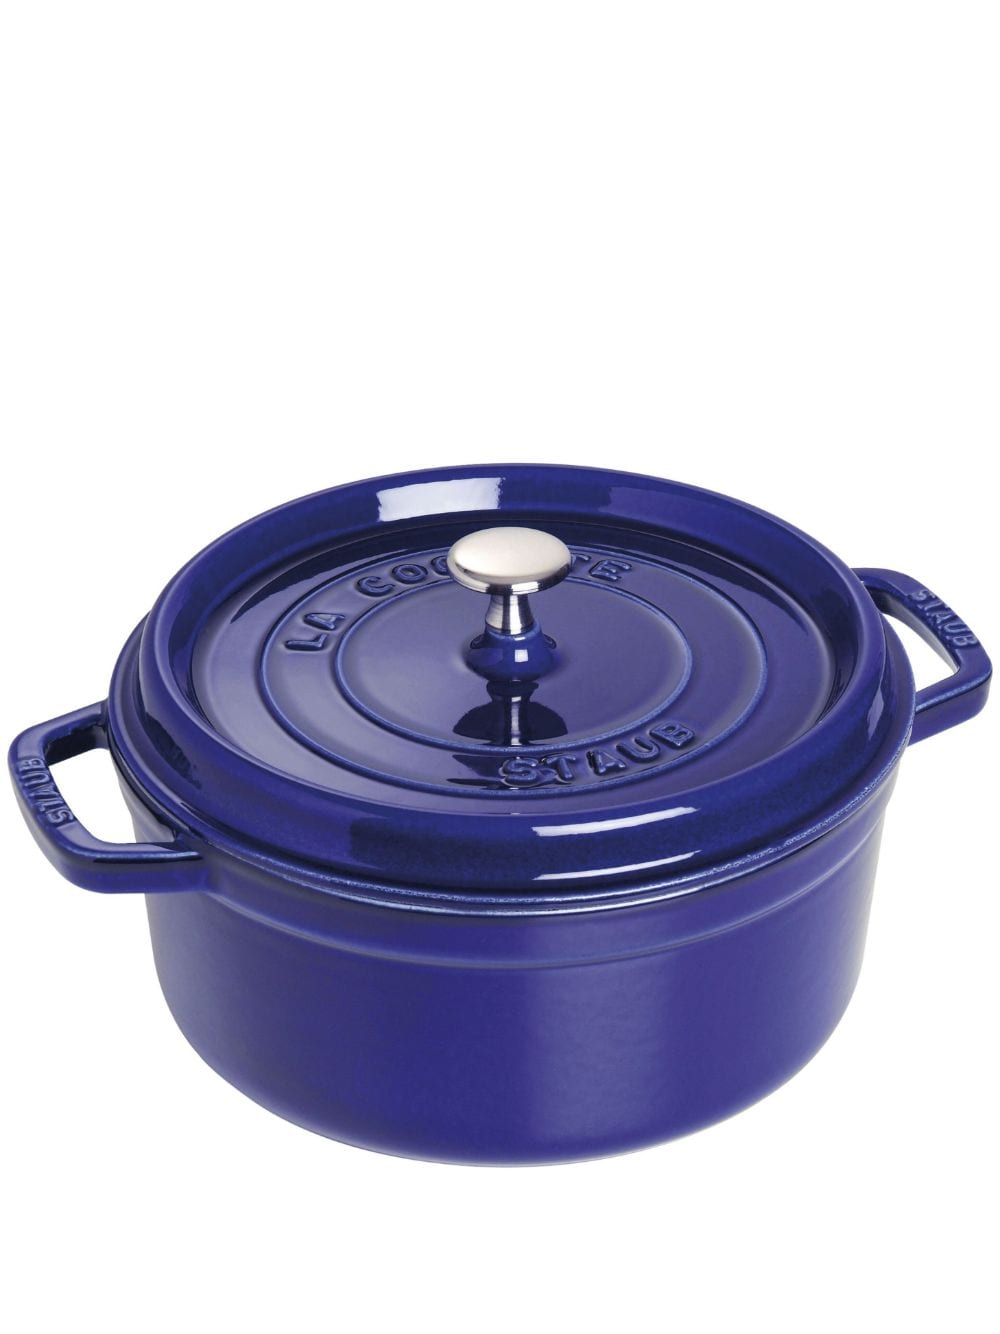 Staub Cocotte Rotonda Pan In Blau